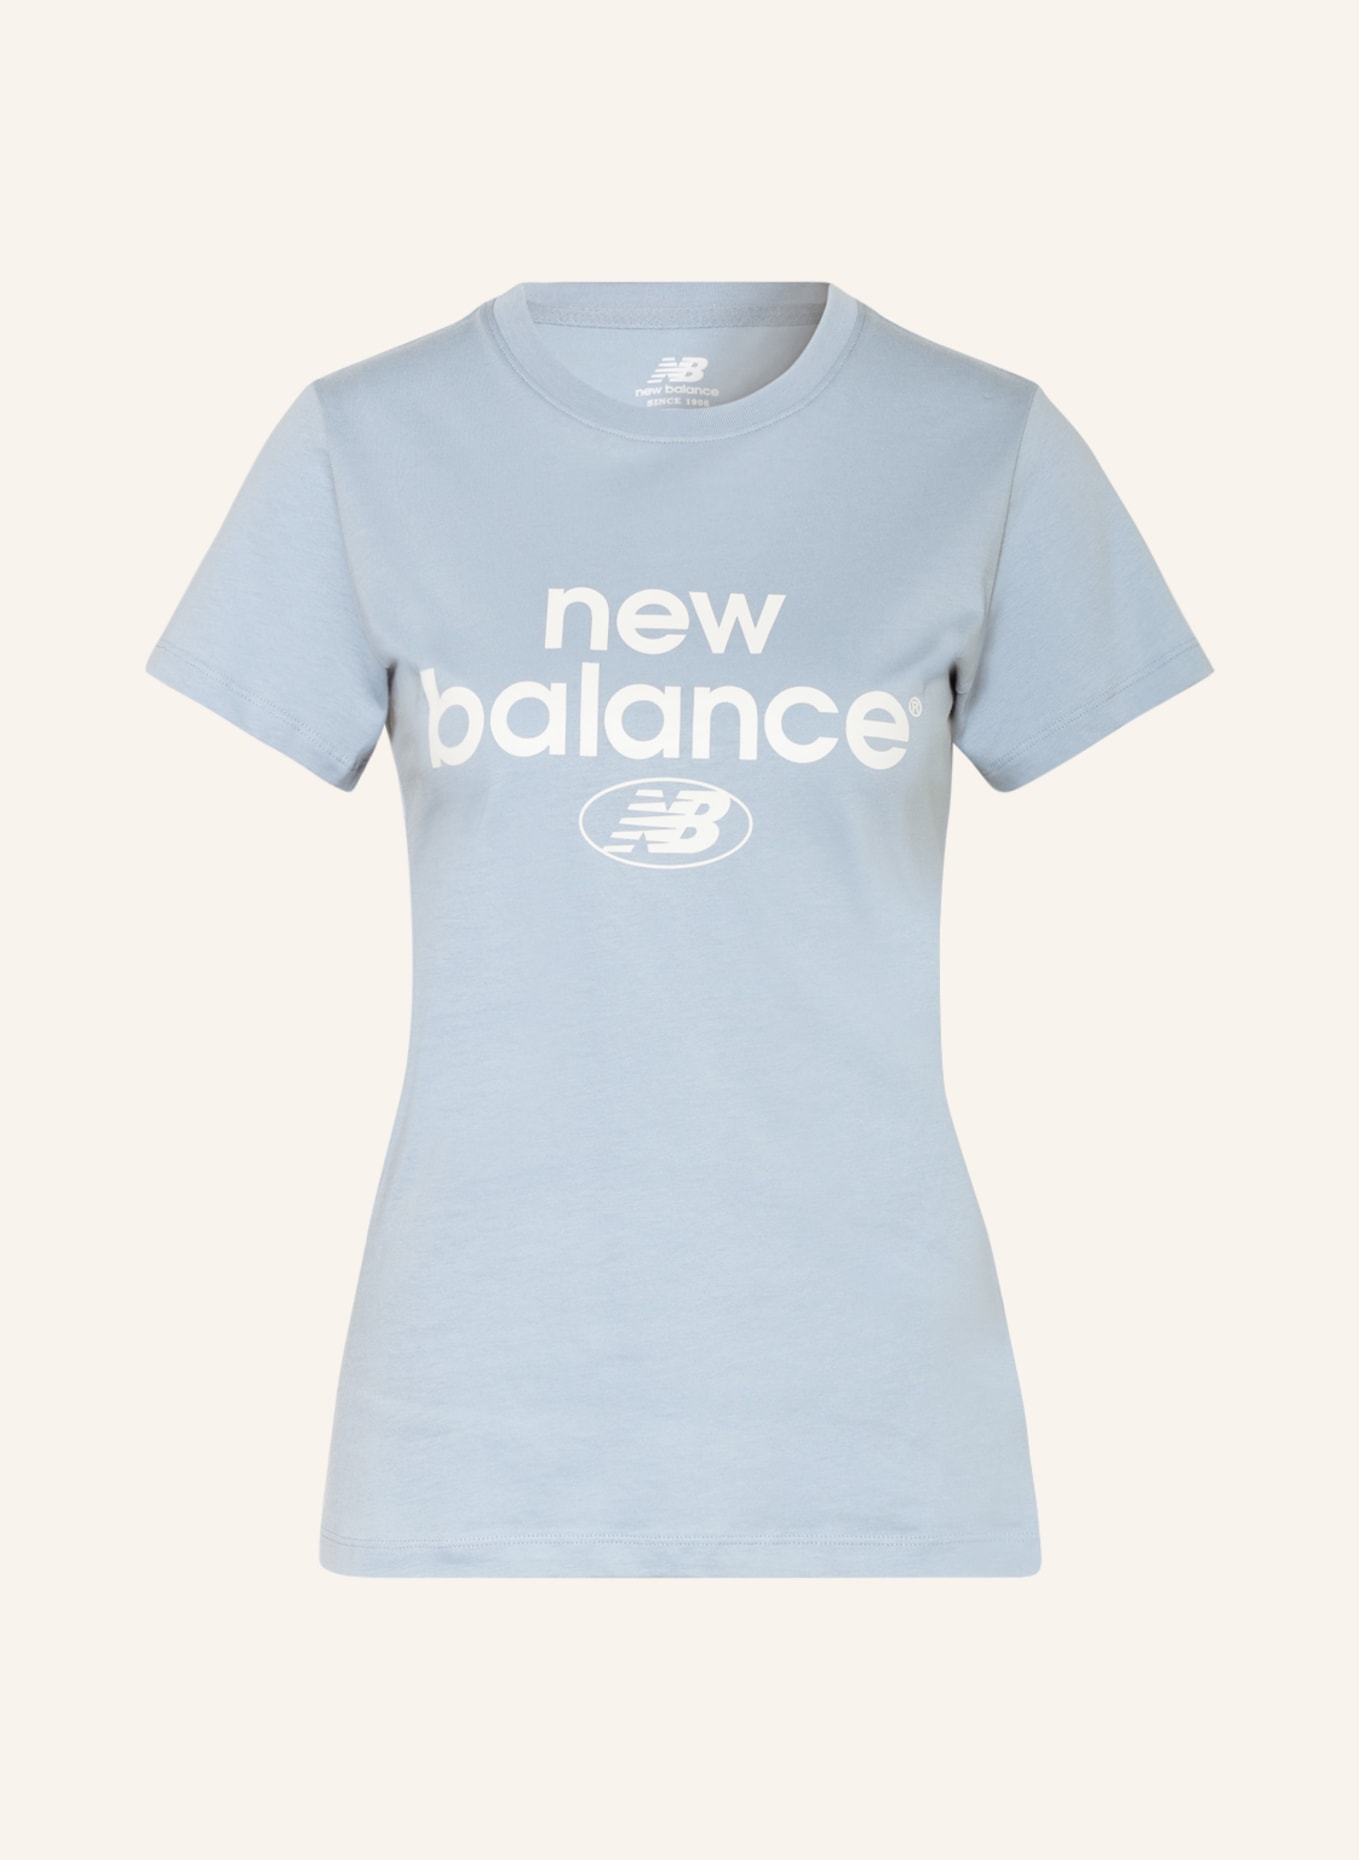 new balance white blue/ light T-shirt ESSENTIALS in